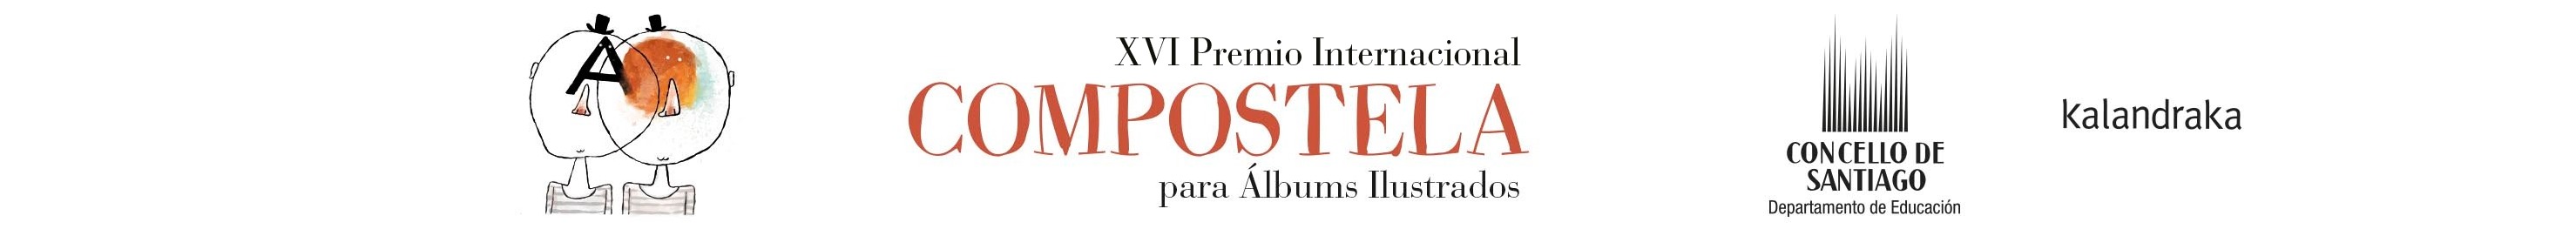 XVI Premio Compostela de albums ilustrados